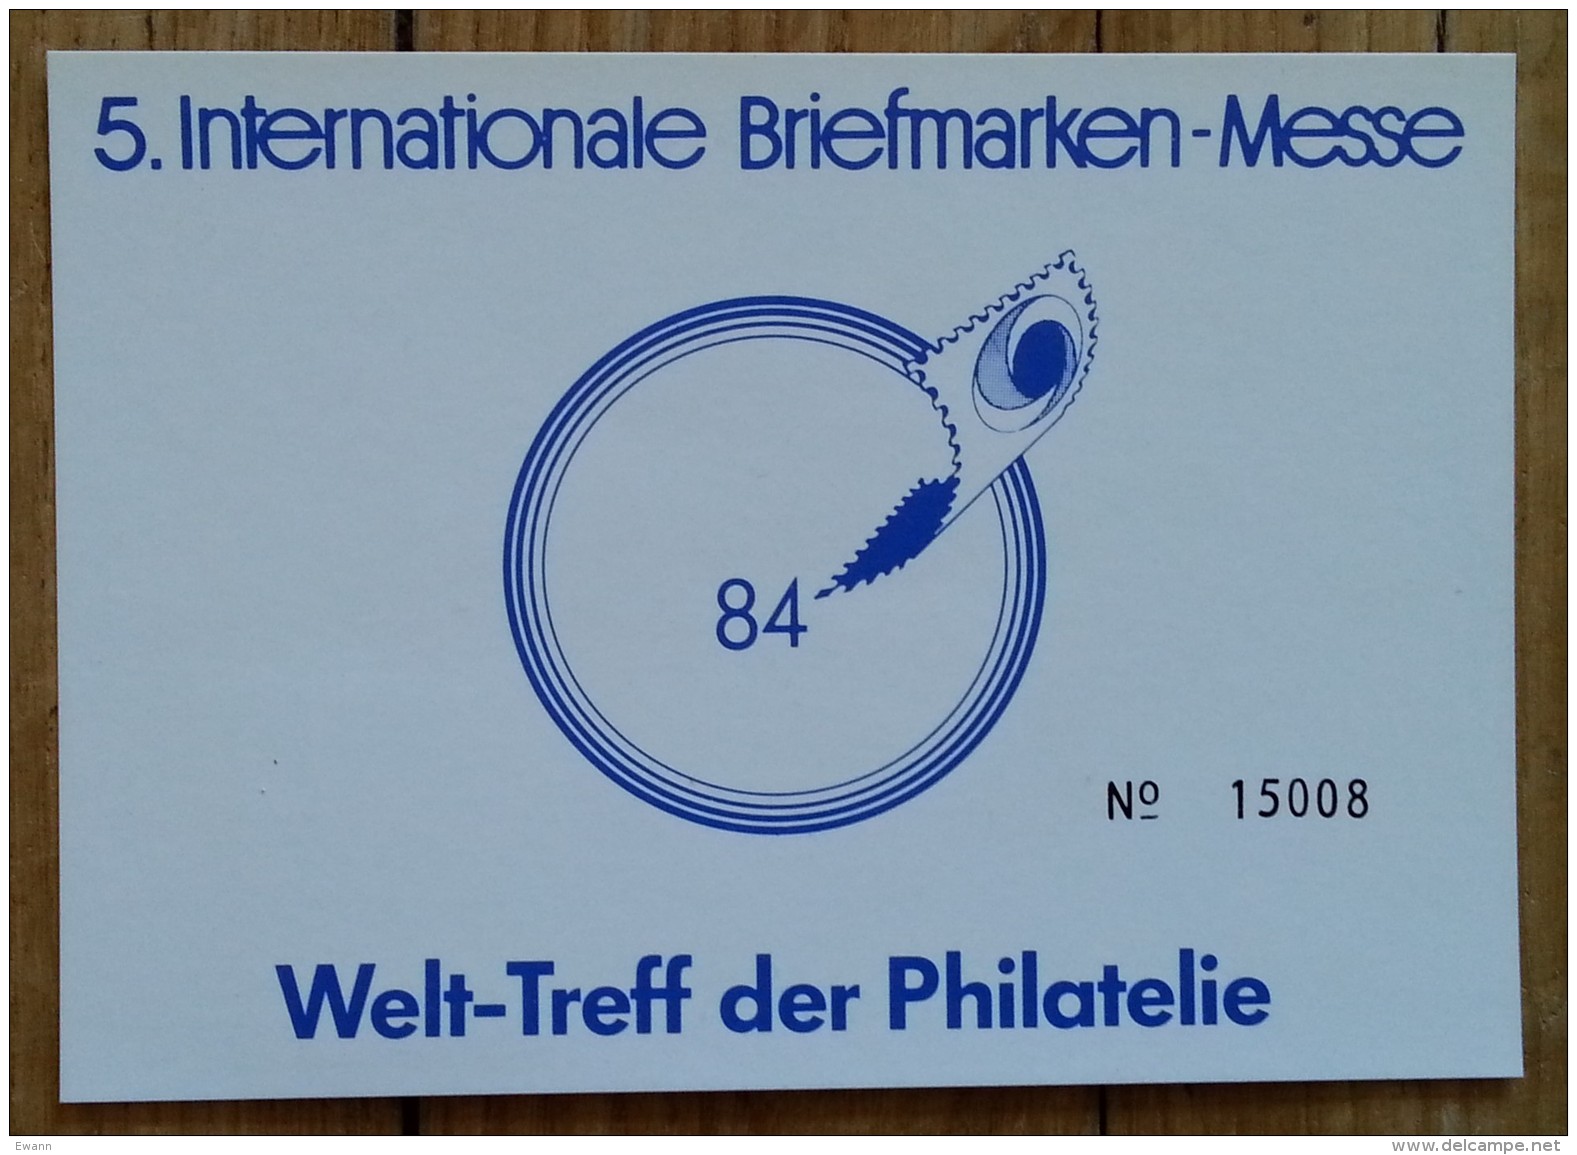 CUBA - Timbre De Distributeur - International Briefmarken Messe - ESSEN - 1984 - Franking Labels